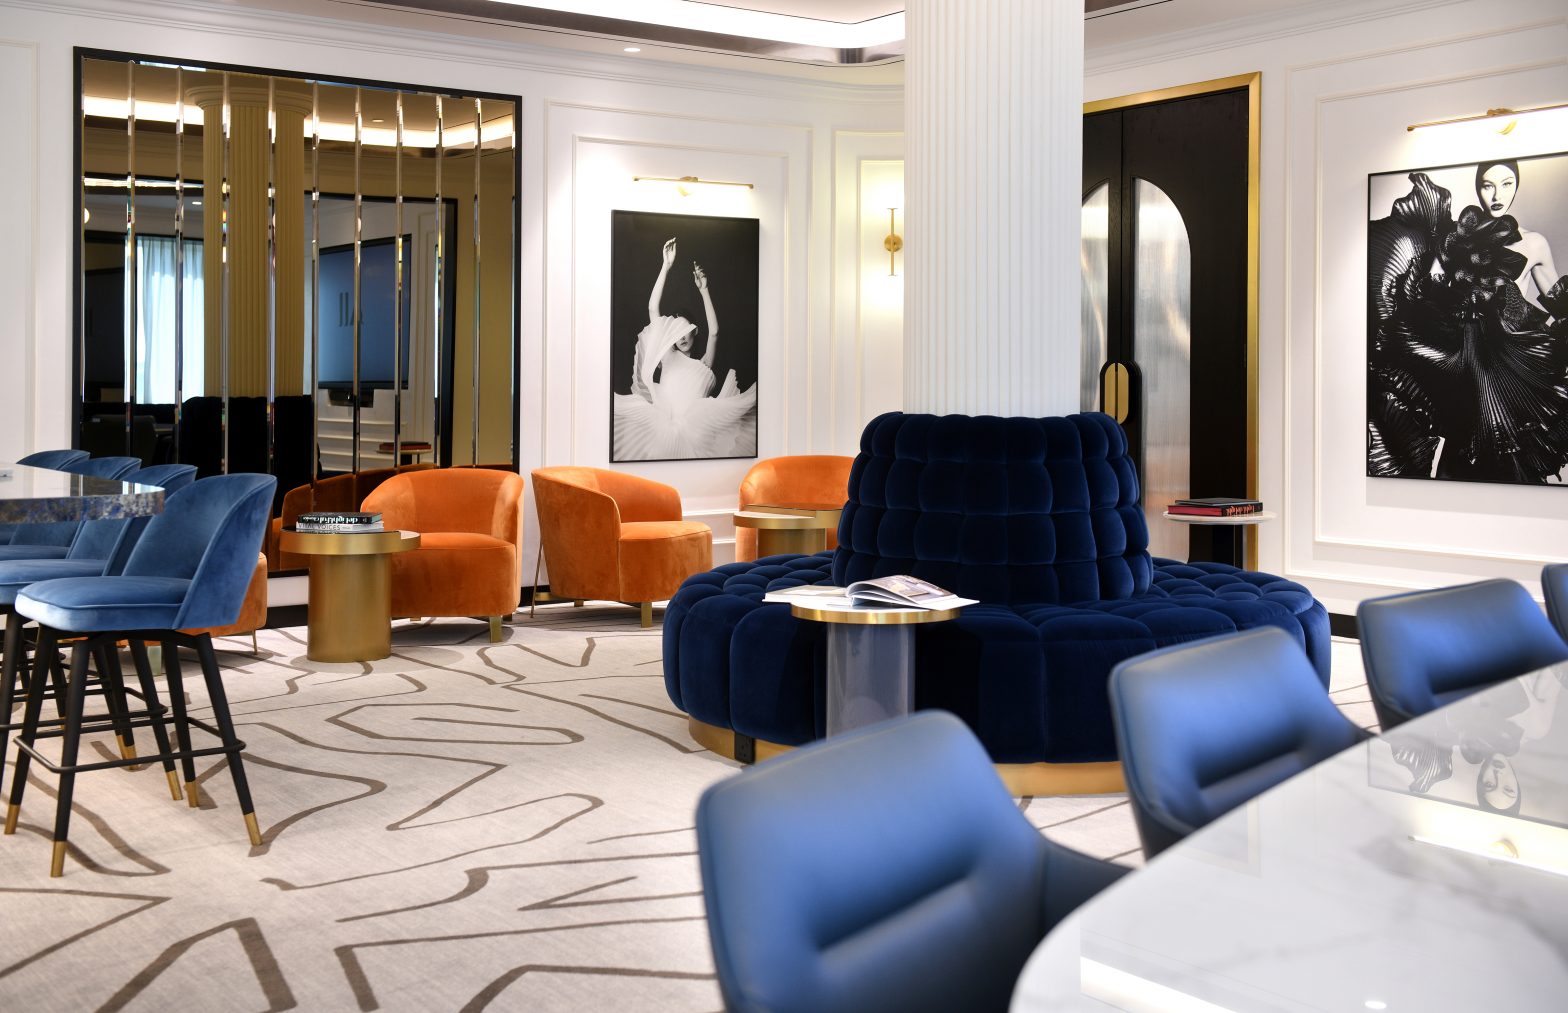 Accor Dubai office embraces hotel design - Hotelier Middle East